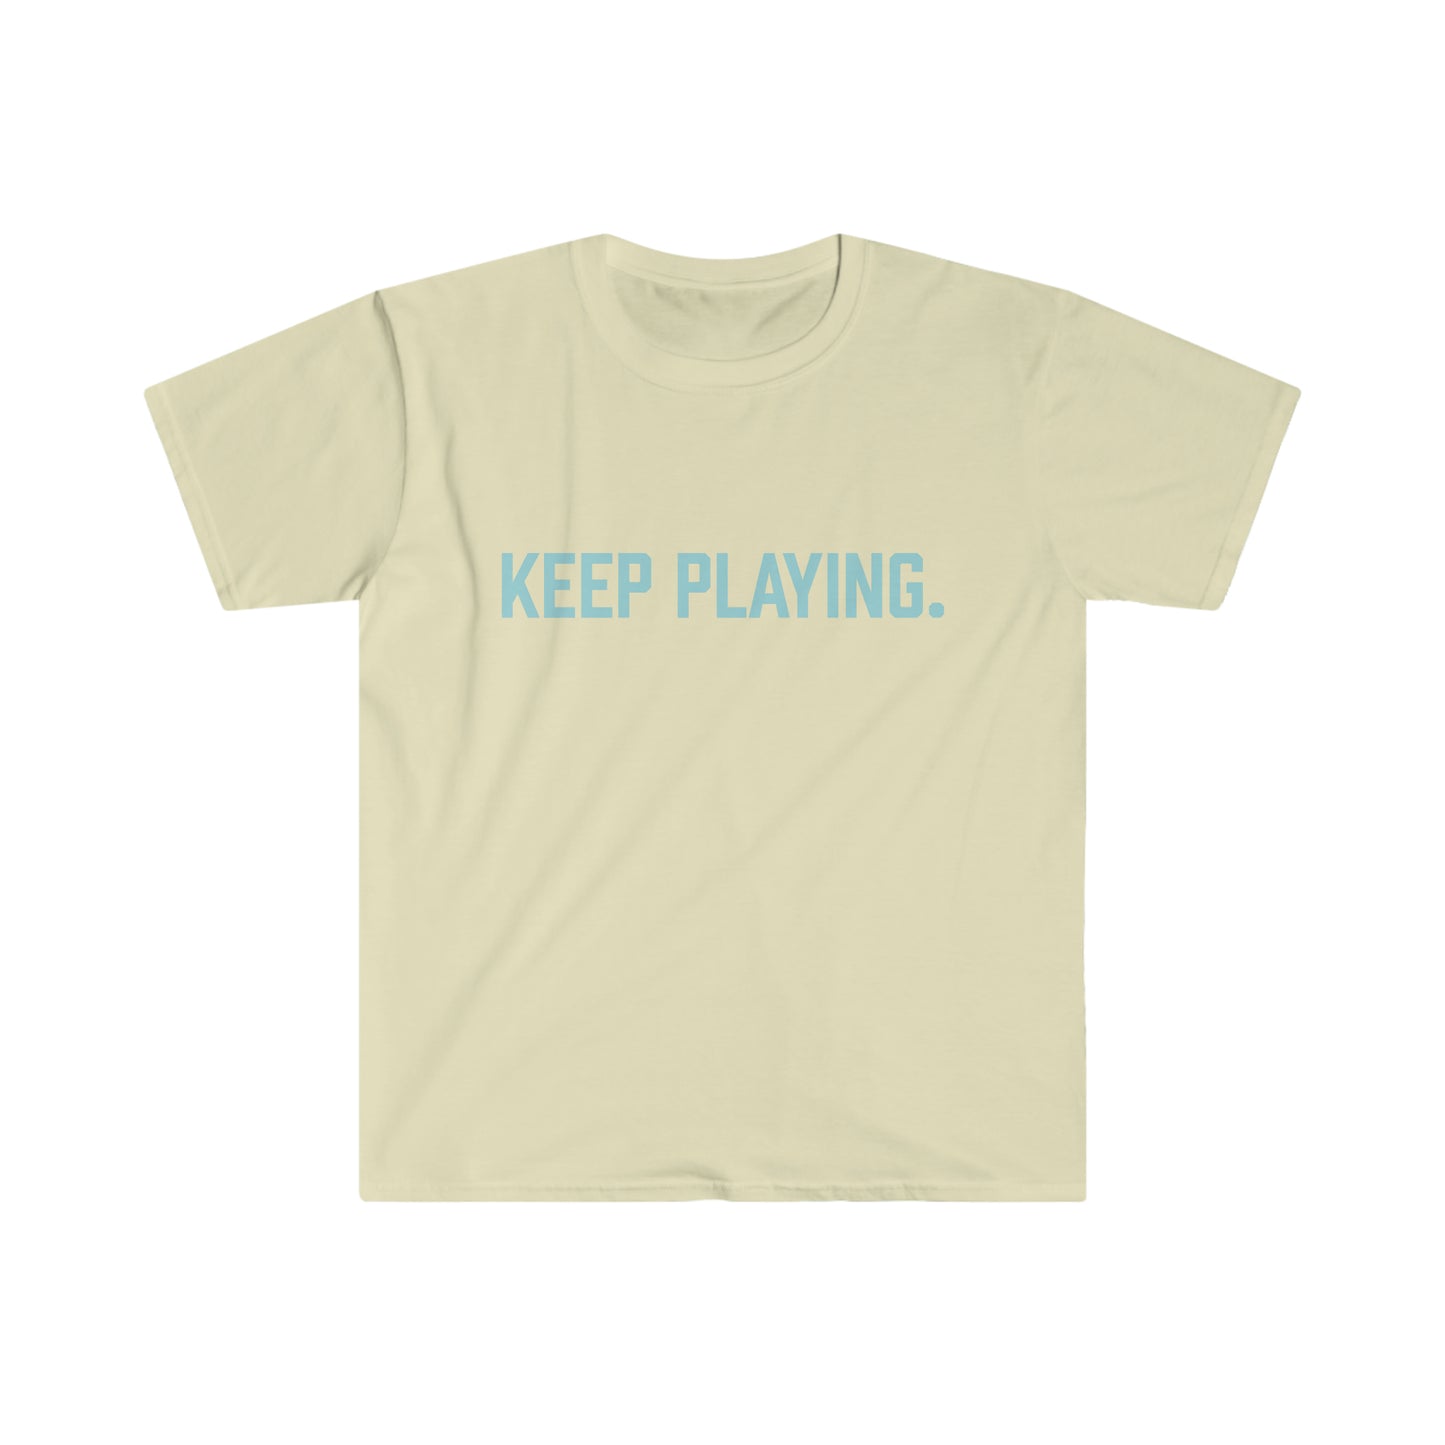 Keep Playing. T-Shirt